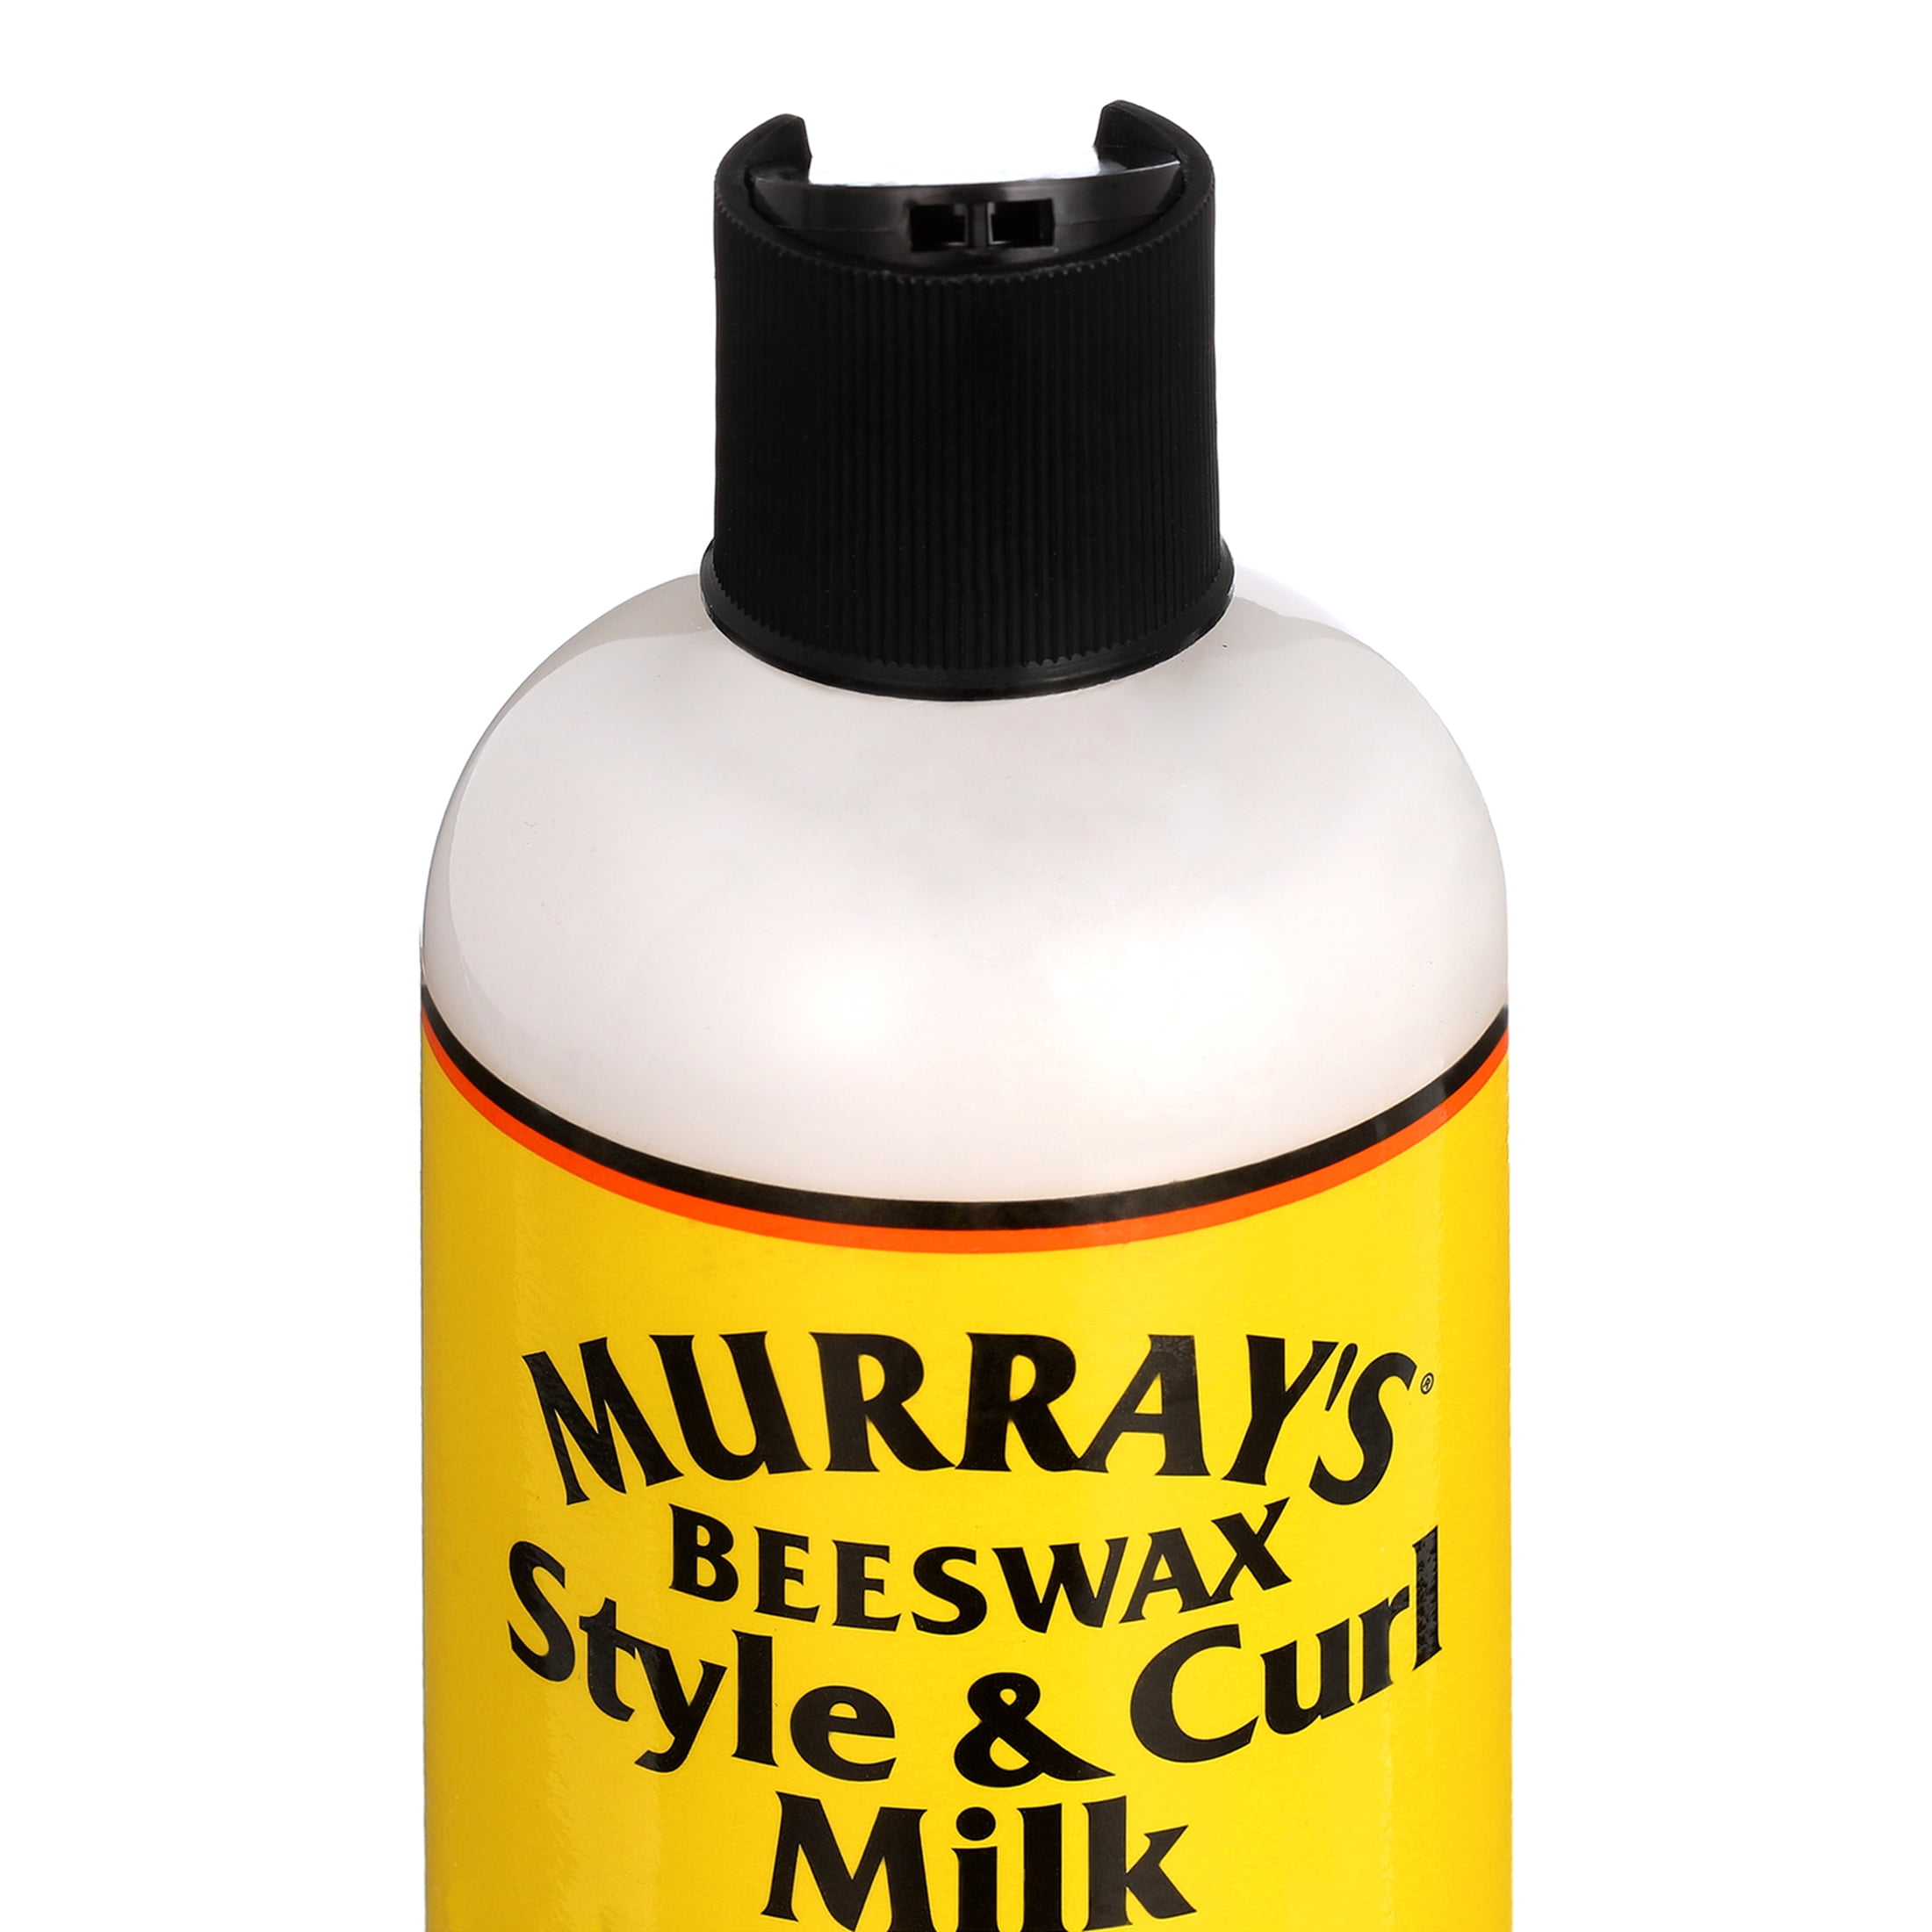 MURRAY'S BEESWAX HONEY WHIP, CURL ENHANCER CREAM